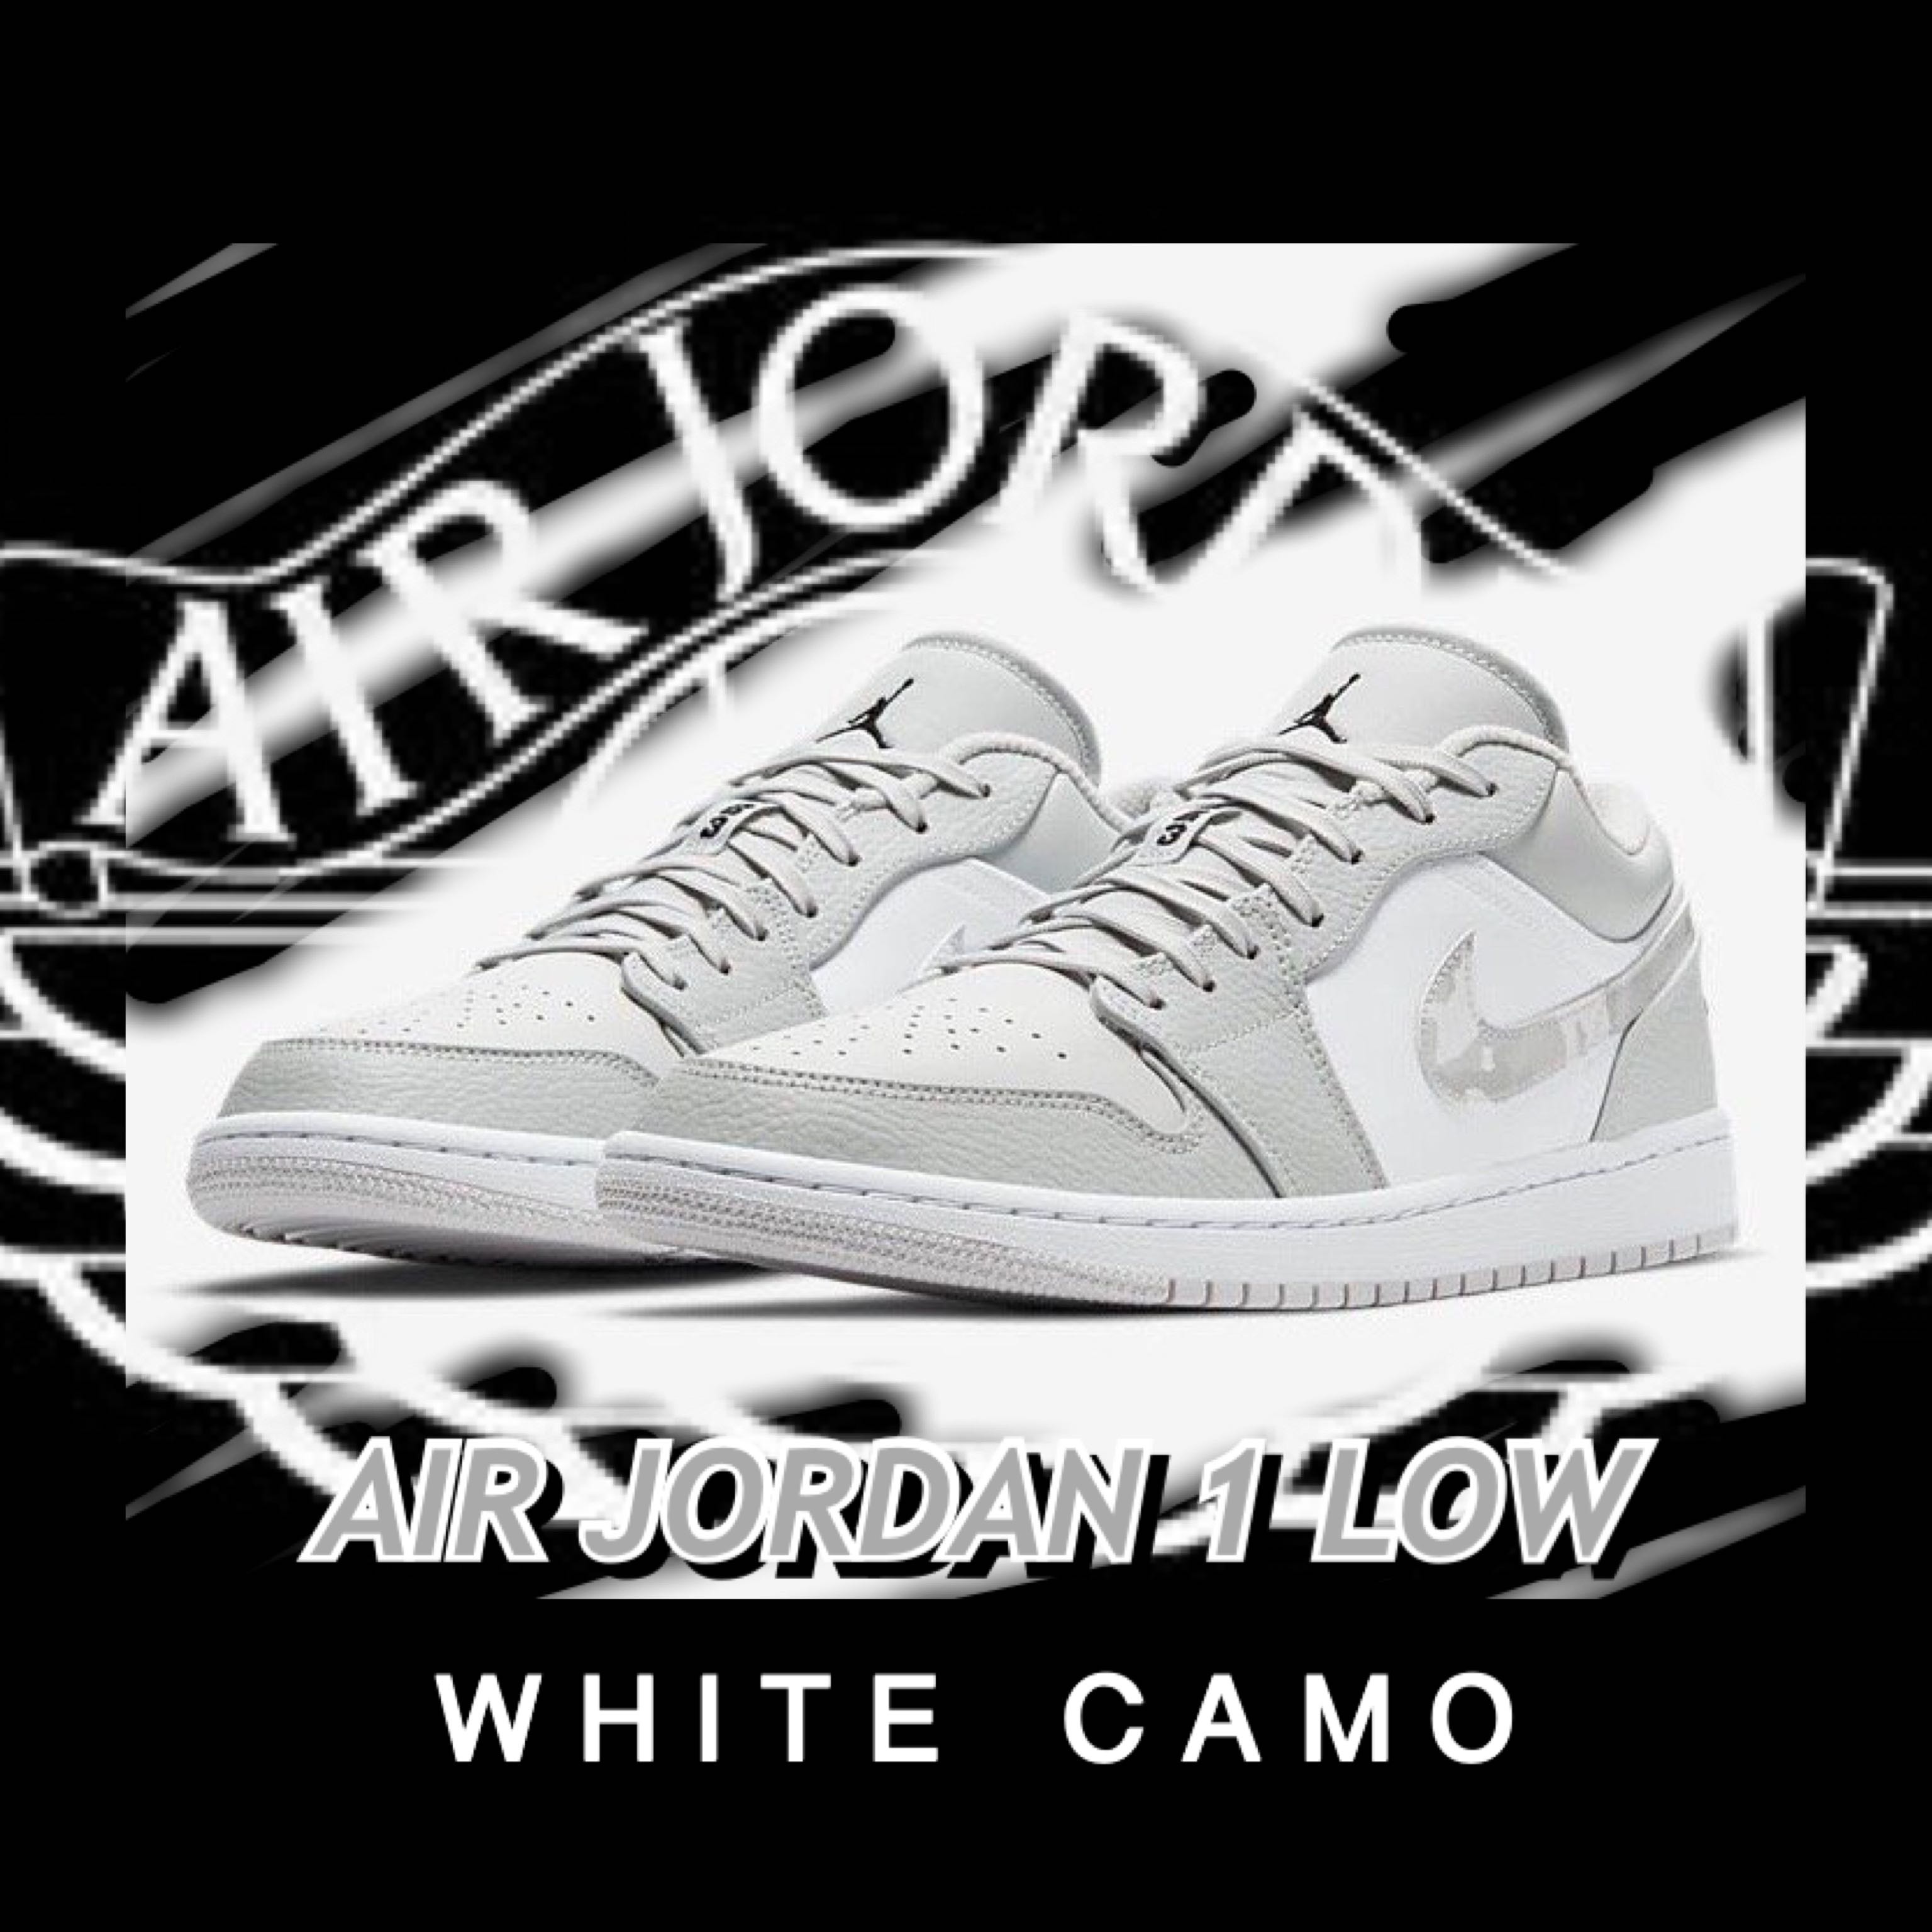 Air Jordan Low White Camo Men S Fashion Footwear Sneakers On Carousell